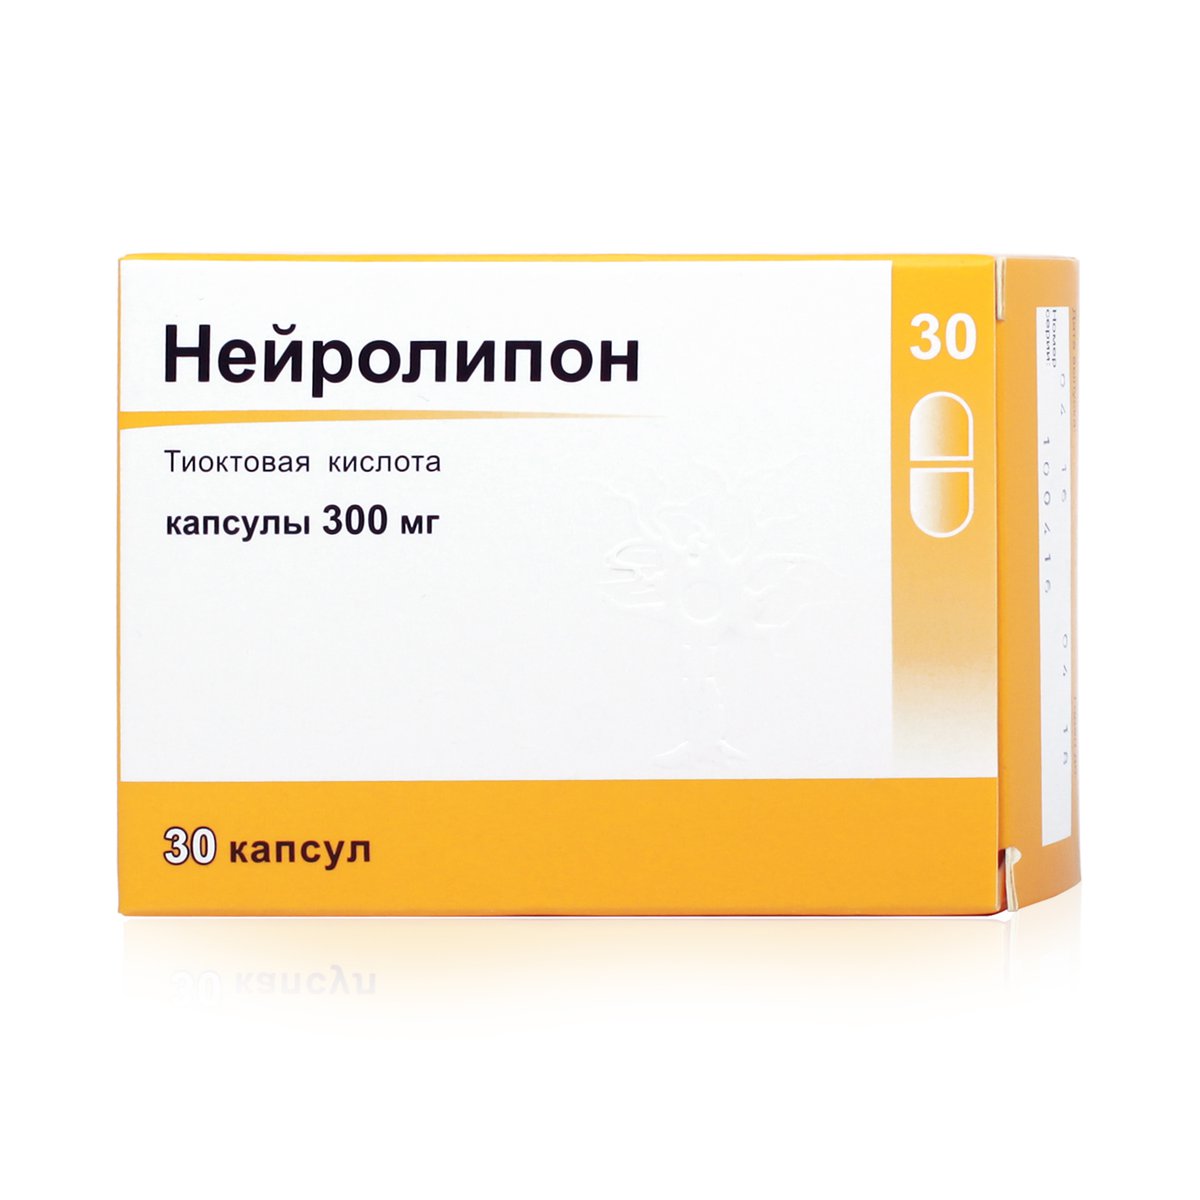 Нейролипон (капсулы, 30 шт, 300 мг) - цена,  онлайн  .